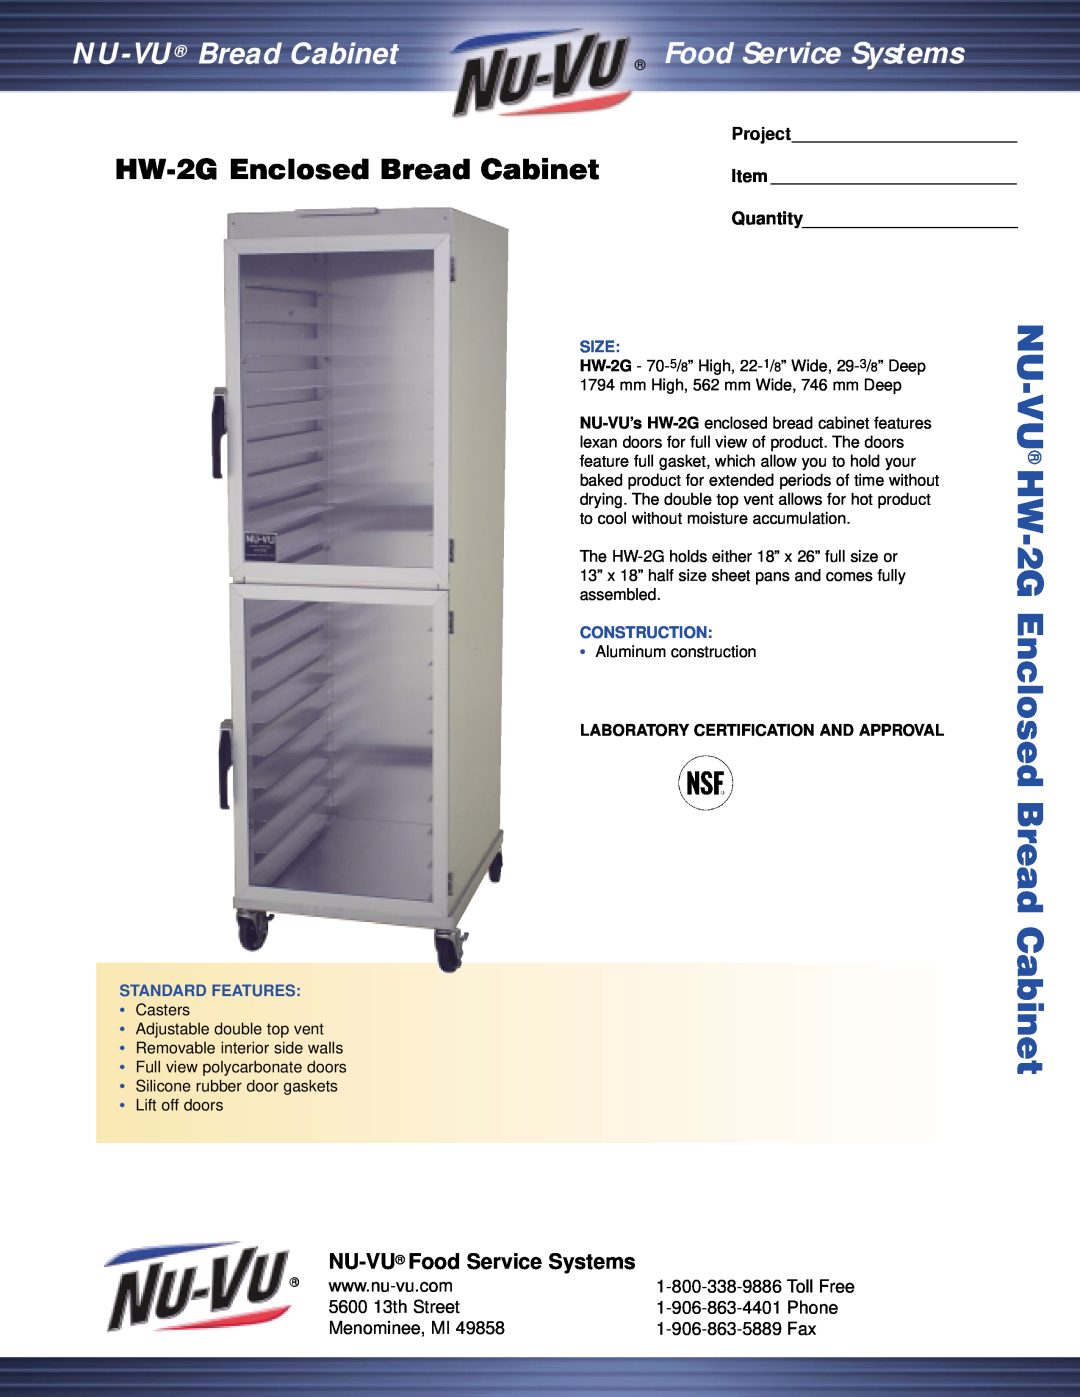 Nu-Vu manual HW-2GEnclosed Bread Cabinet, NU-VU Food Service Systems, 5600 13th Street, Phone, Menominee, MI, Project 